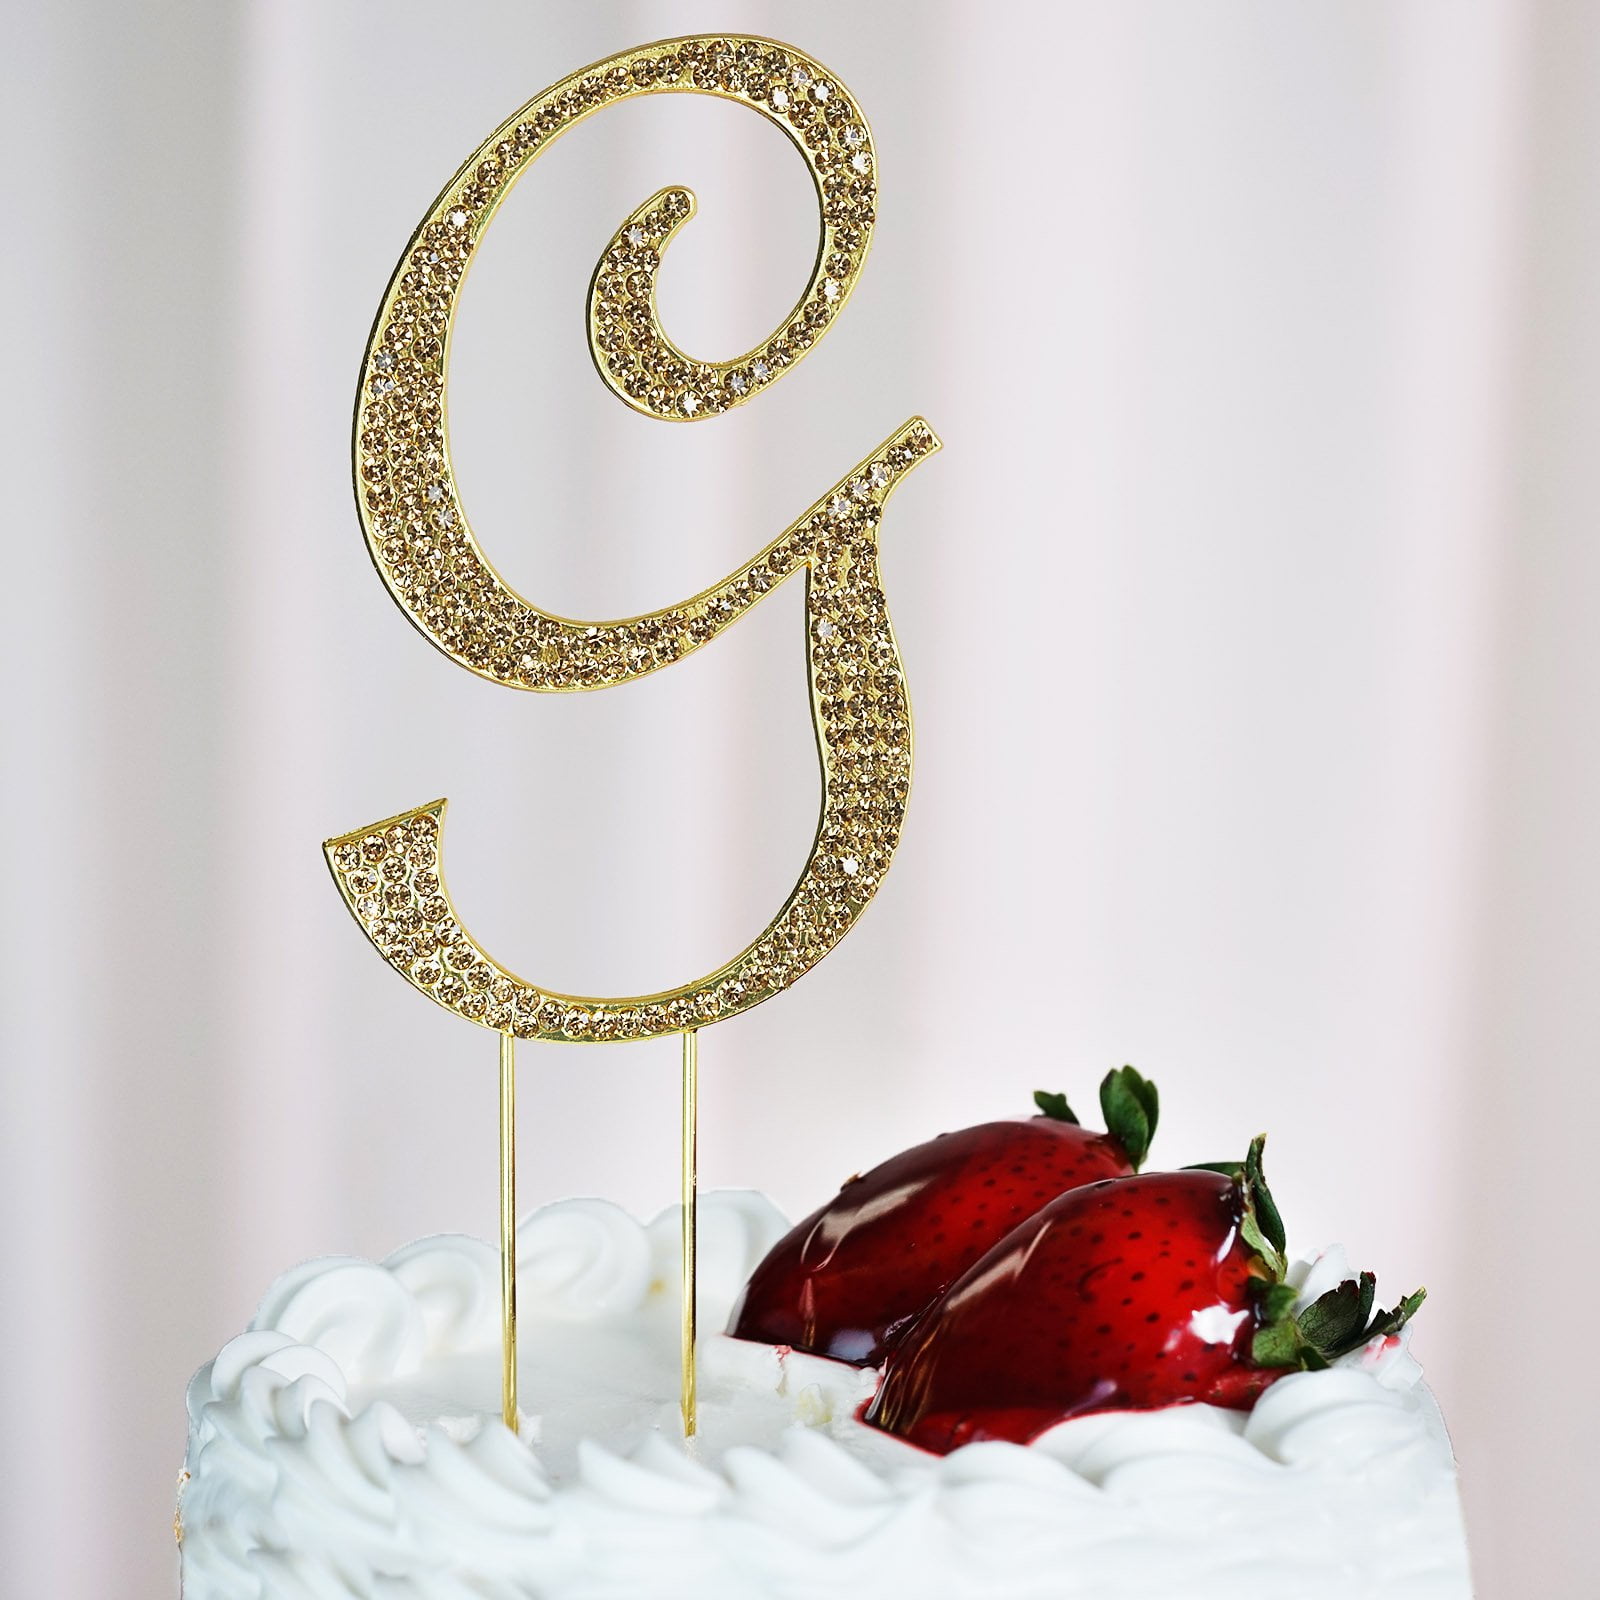 GOLD lated Rhinestone  Monogram Letter “W”  Wedding Cake Topper  5" inch high 